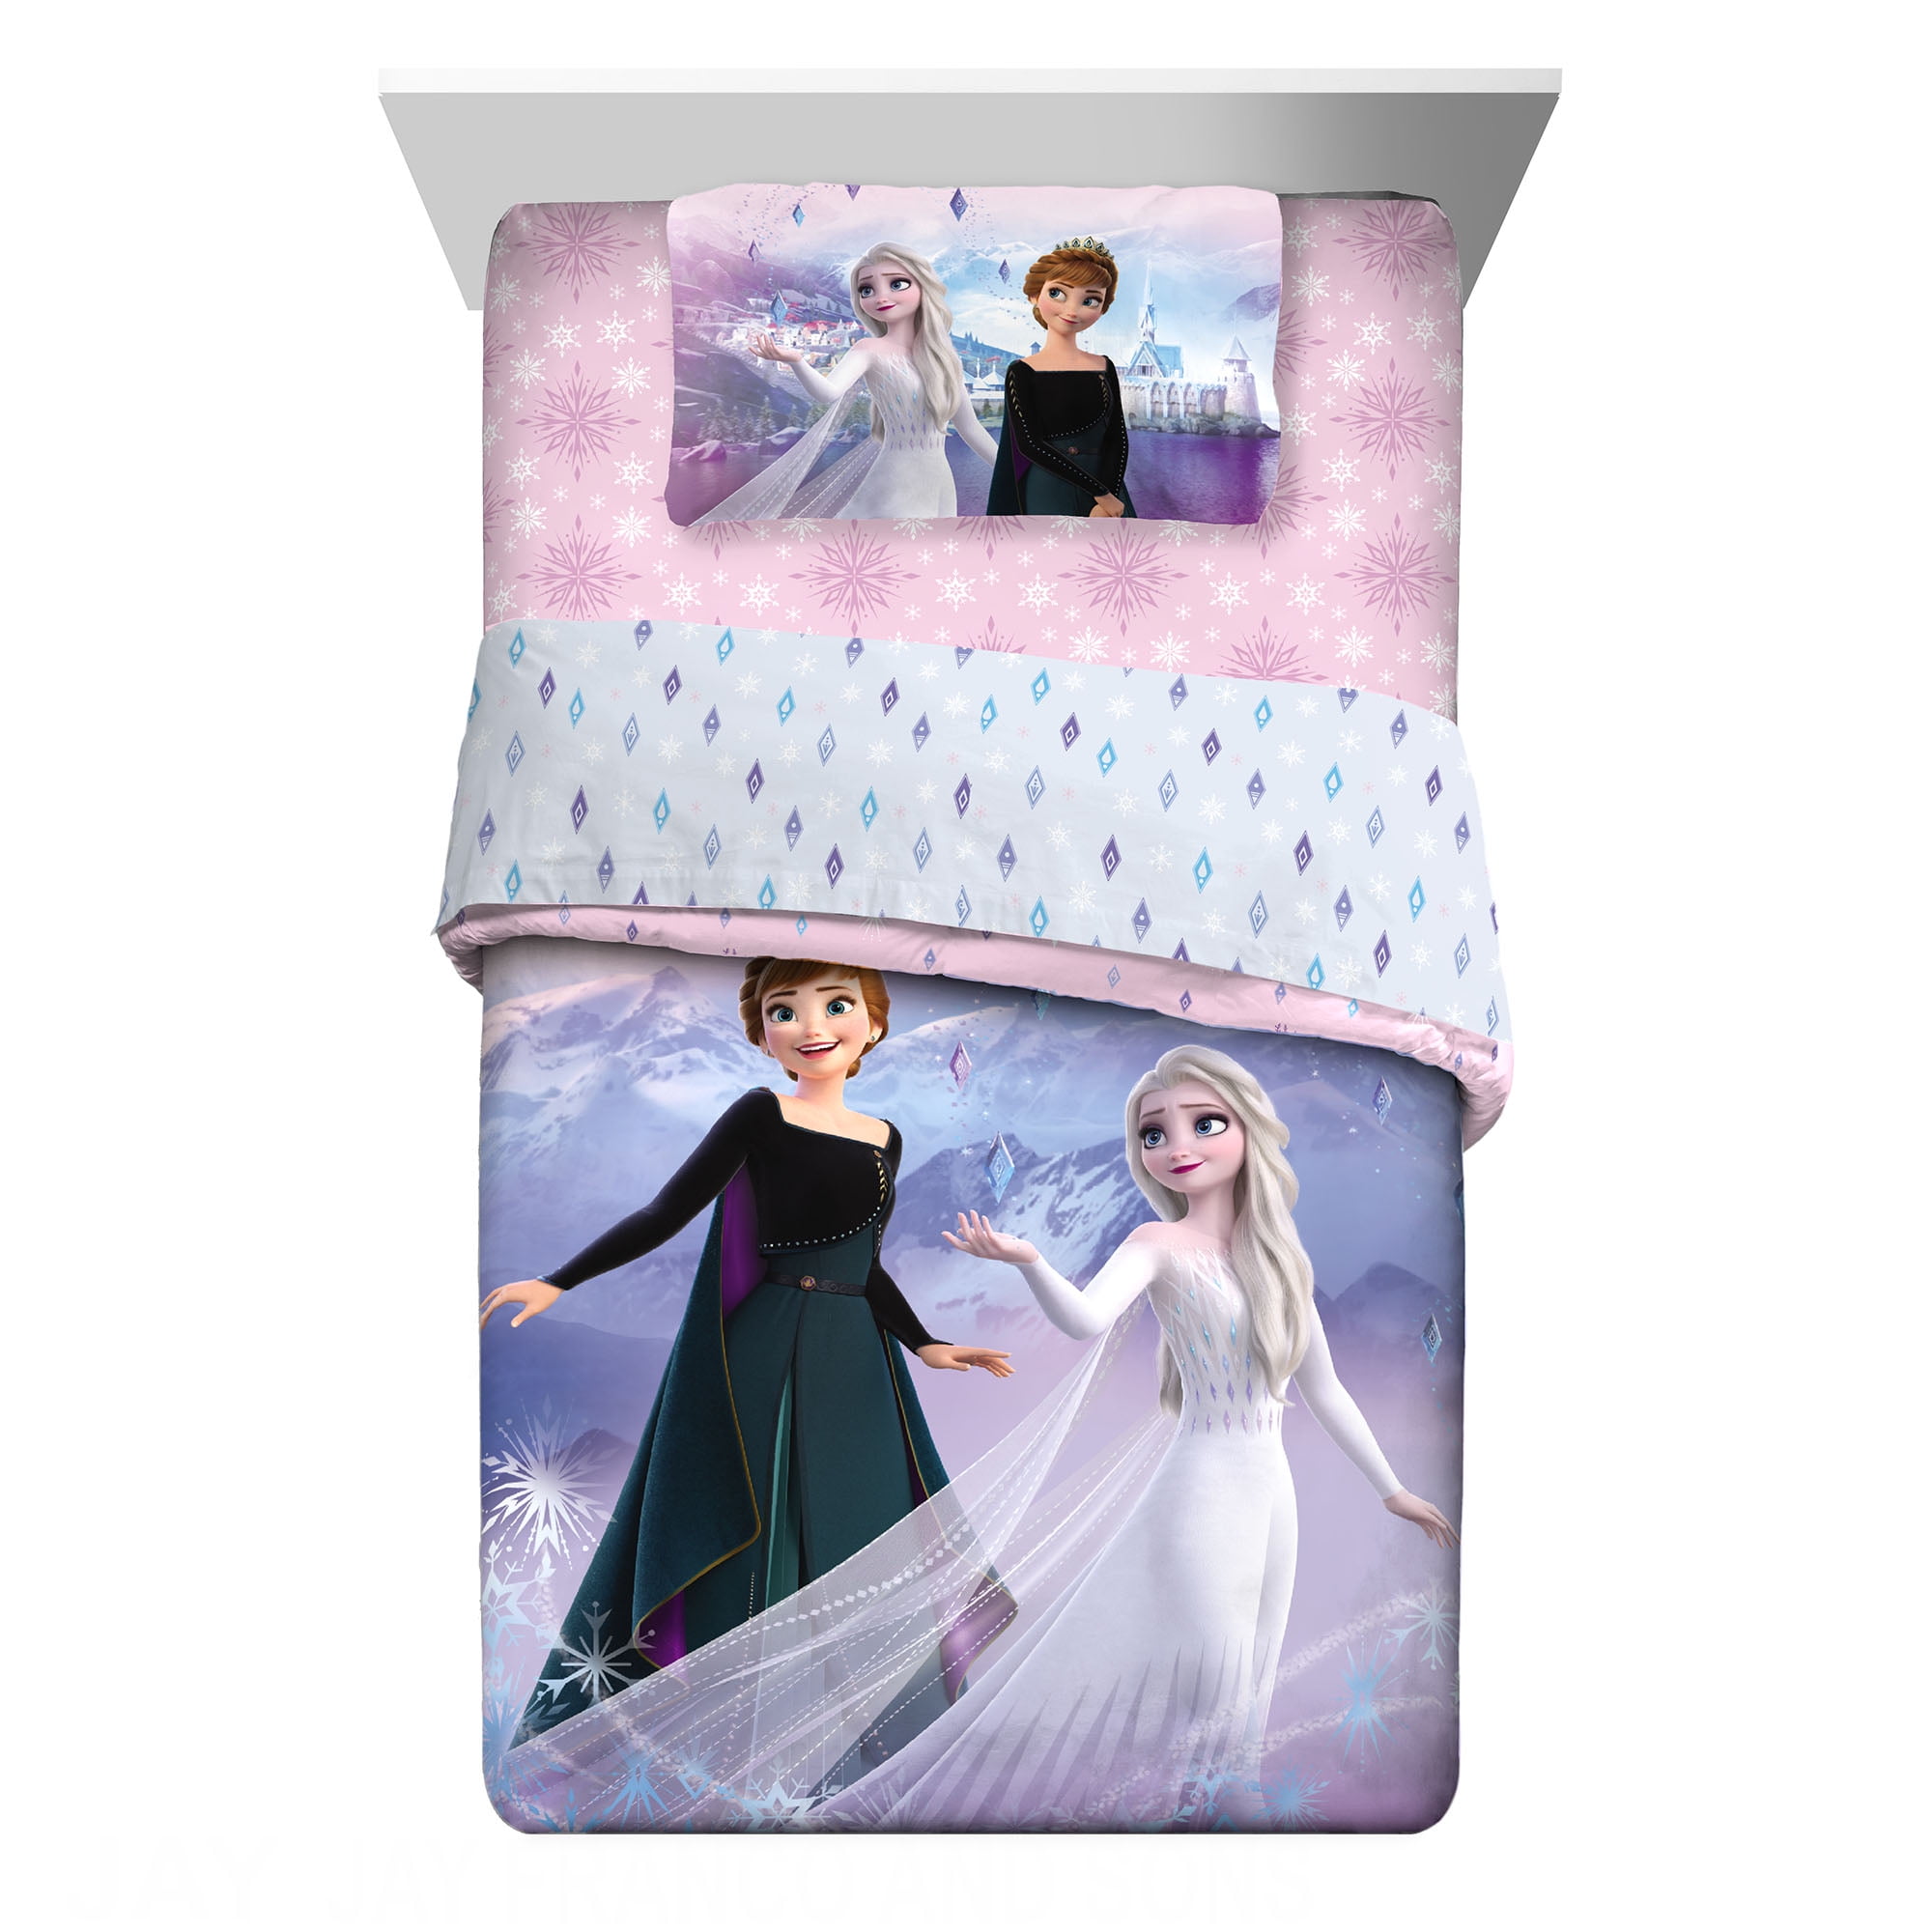 Disney’s Frozen 2 Kids Bed in a Bag Bedding Set w/ Reversible Comforter & Sheet 